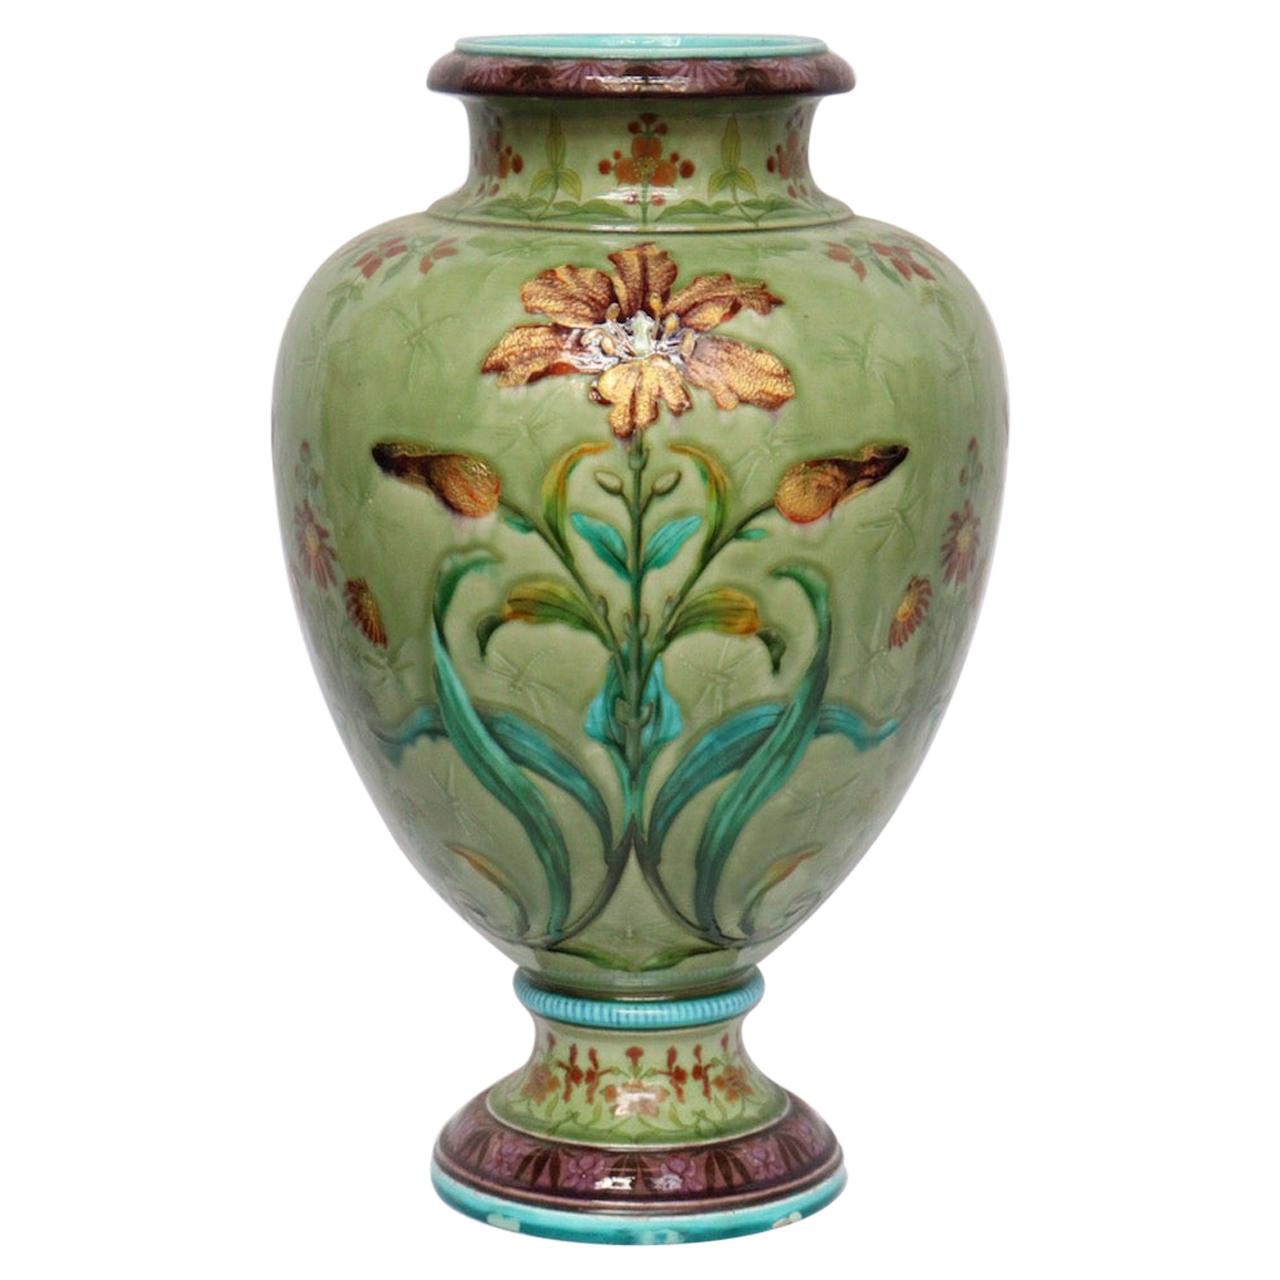 "Iris" a Théodore Deck Enameled Faience Vase, circa 1875